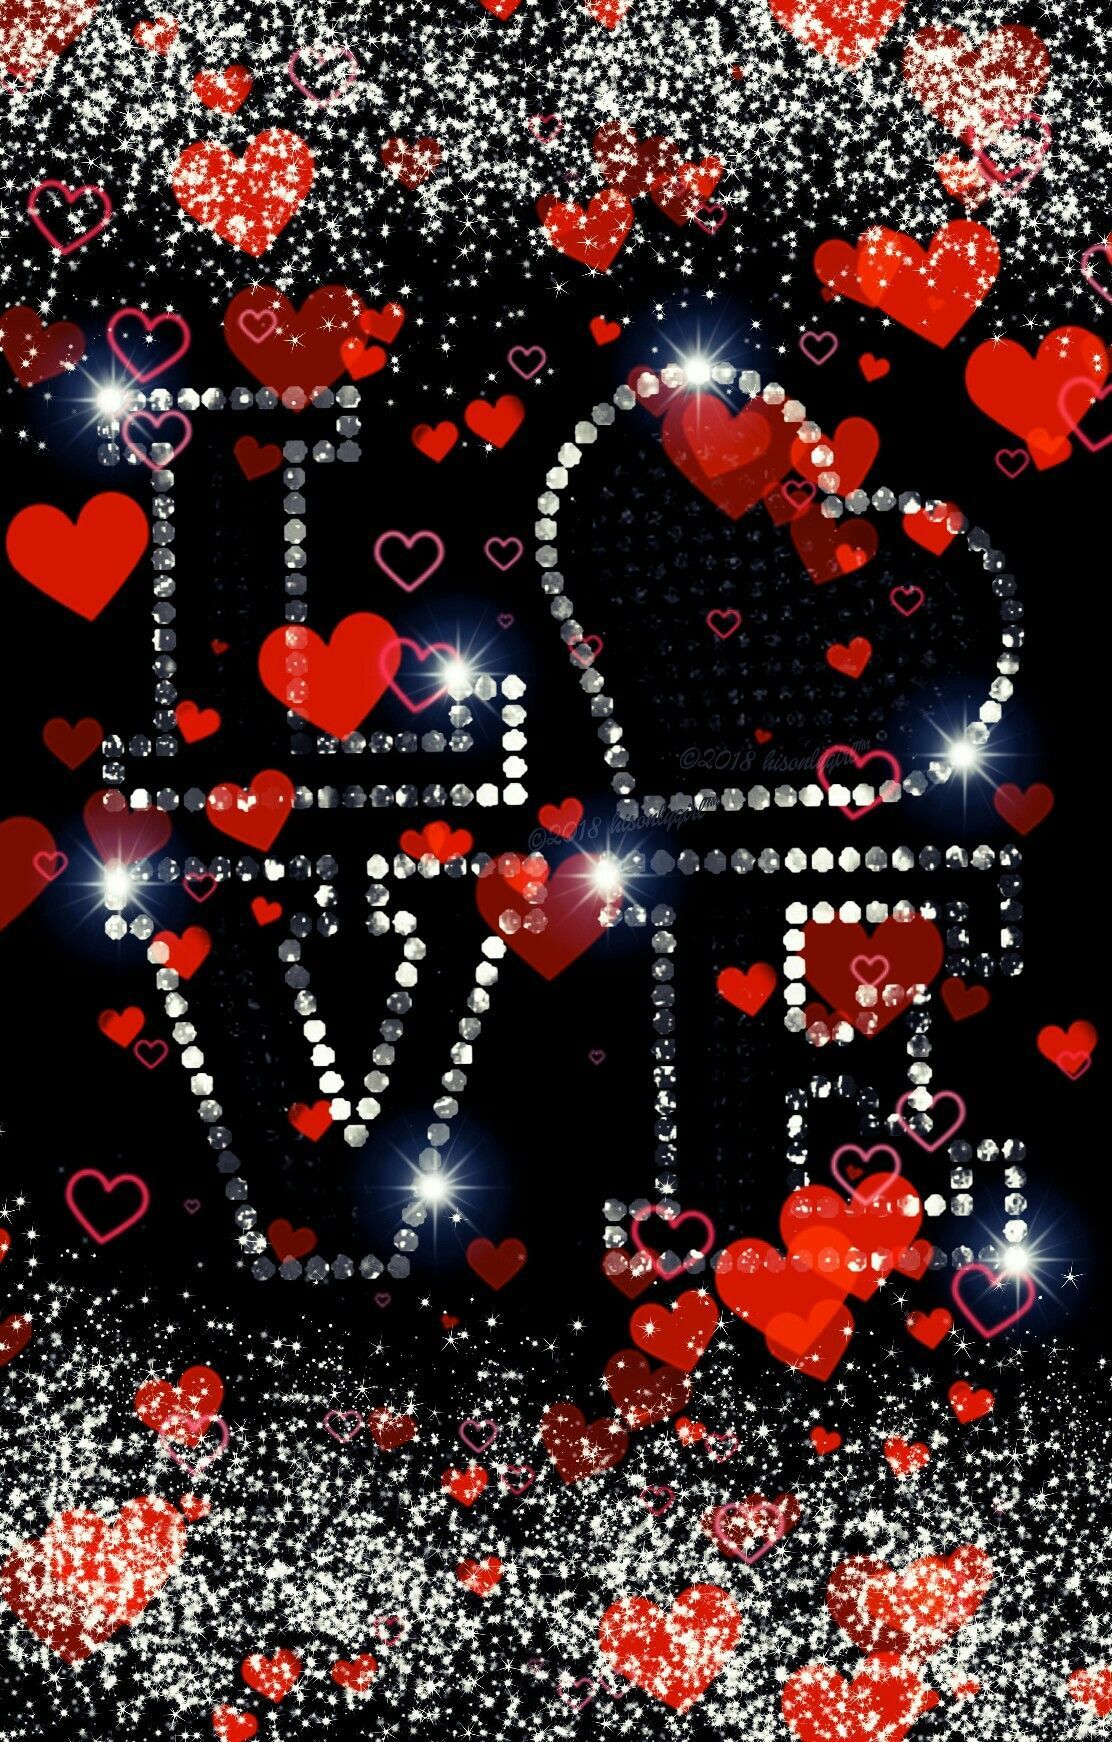 Red hearts love Glitter wallpaper I created for CocoPPa. Love